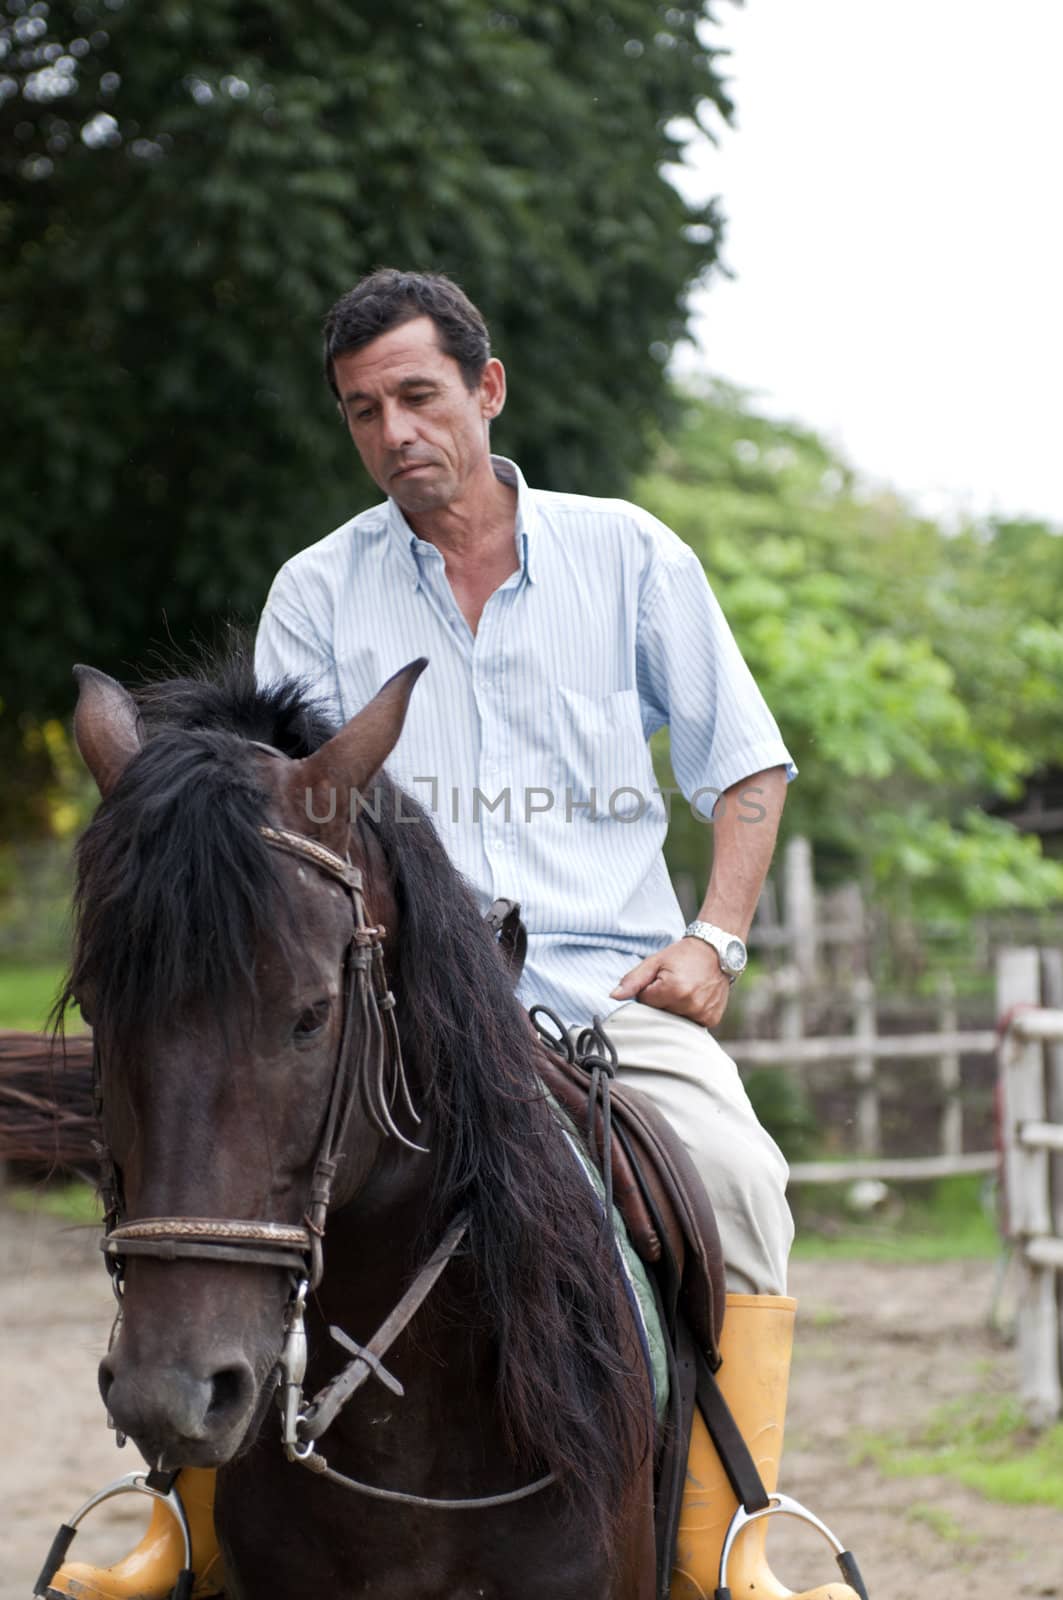 Horses and riders on a farm in Ecuador